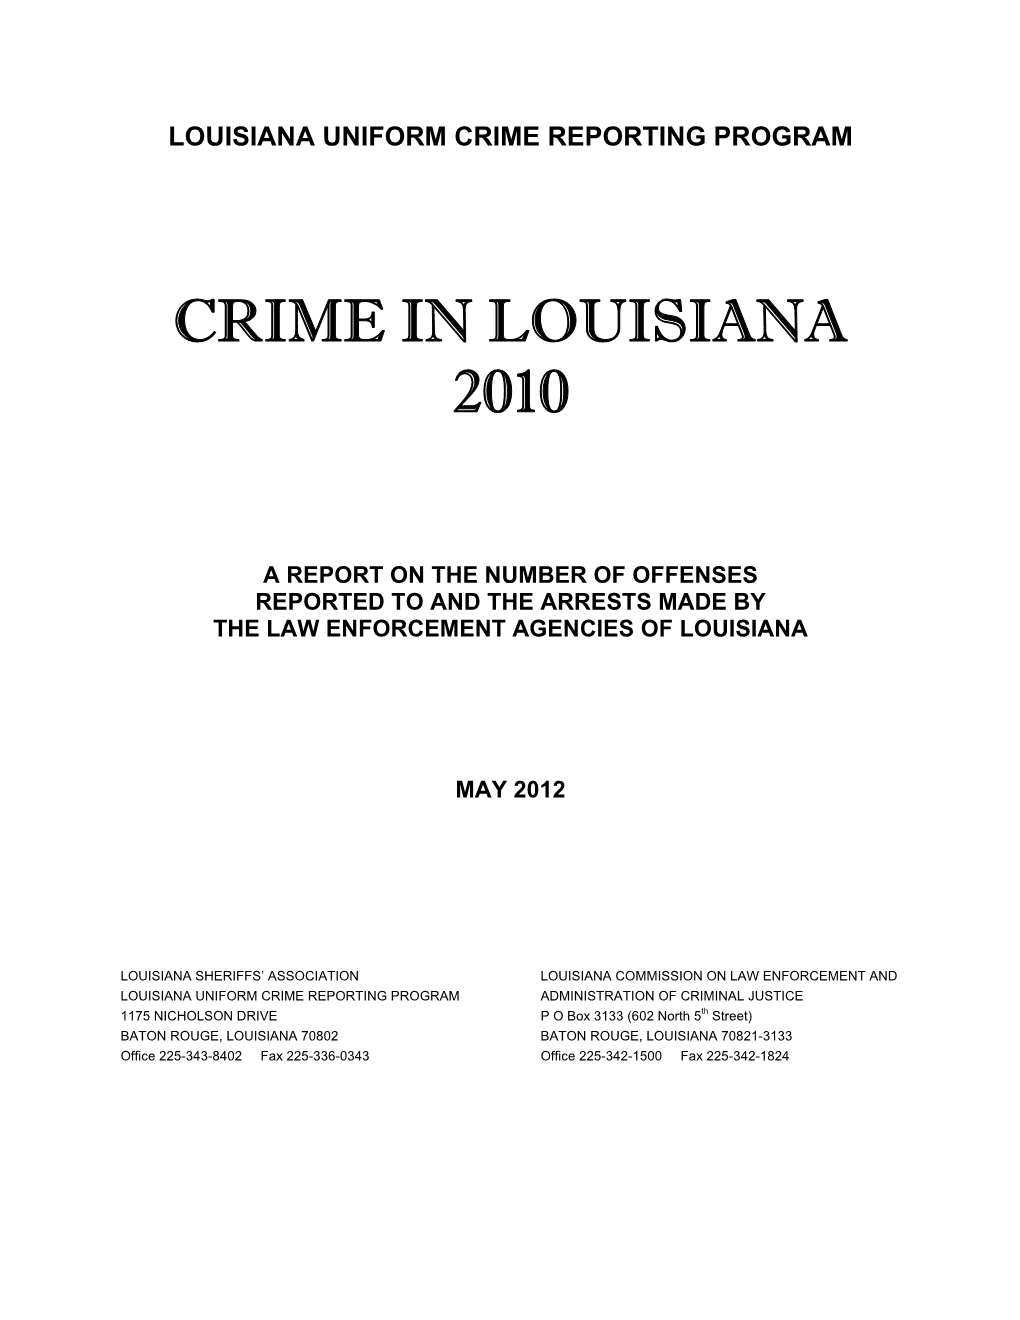 Crime in Louisiana 2010